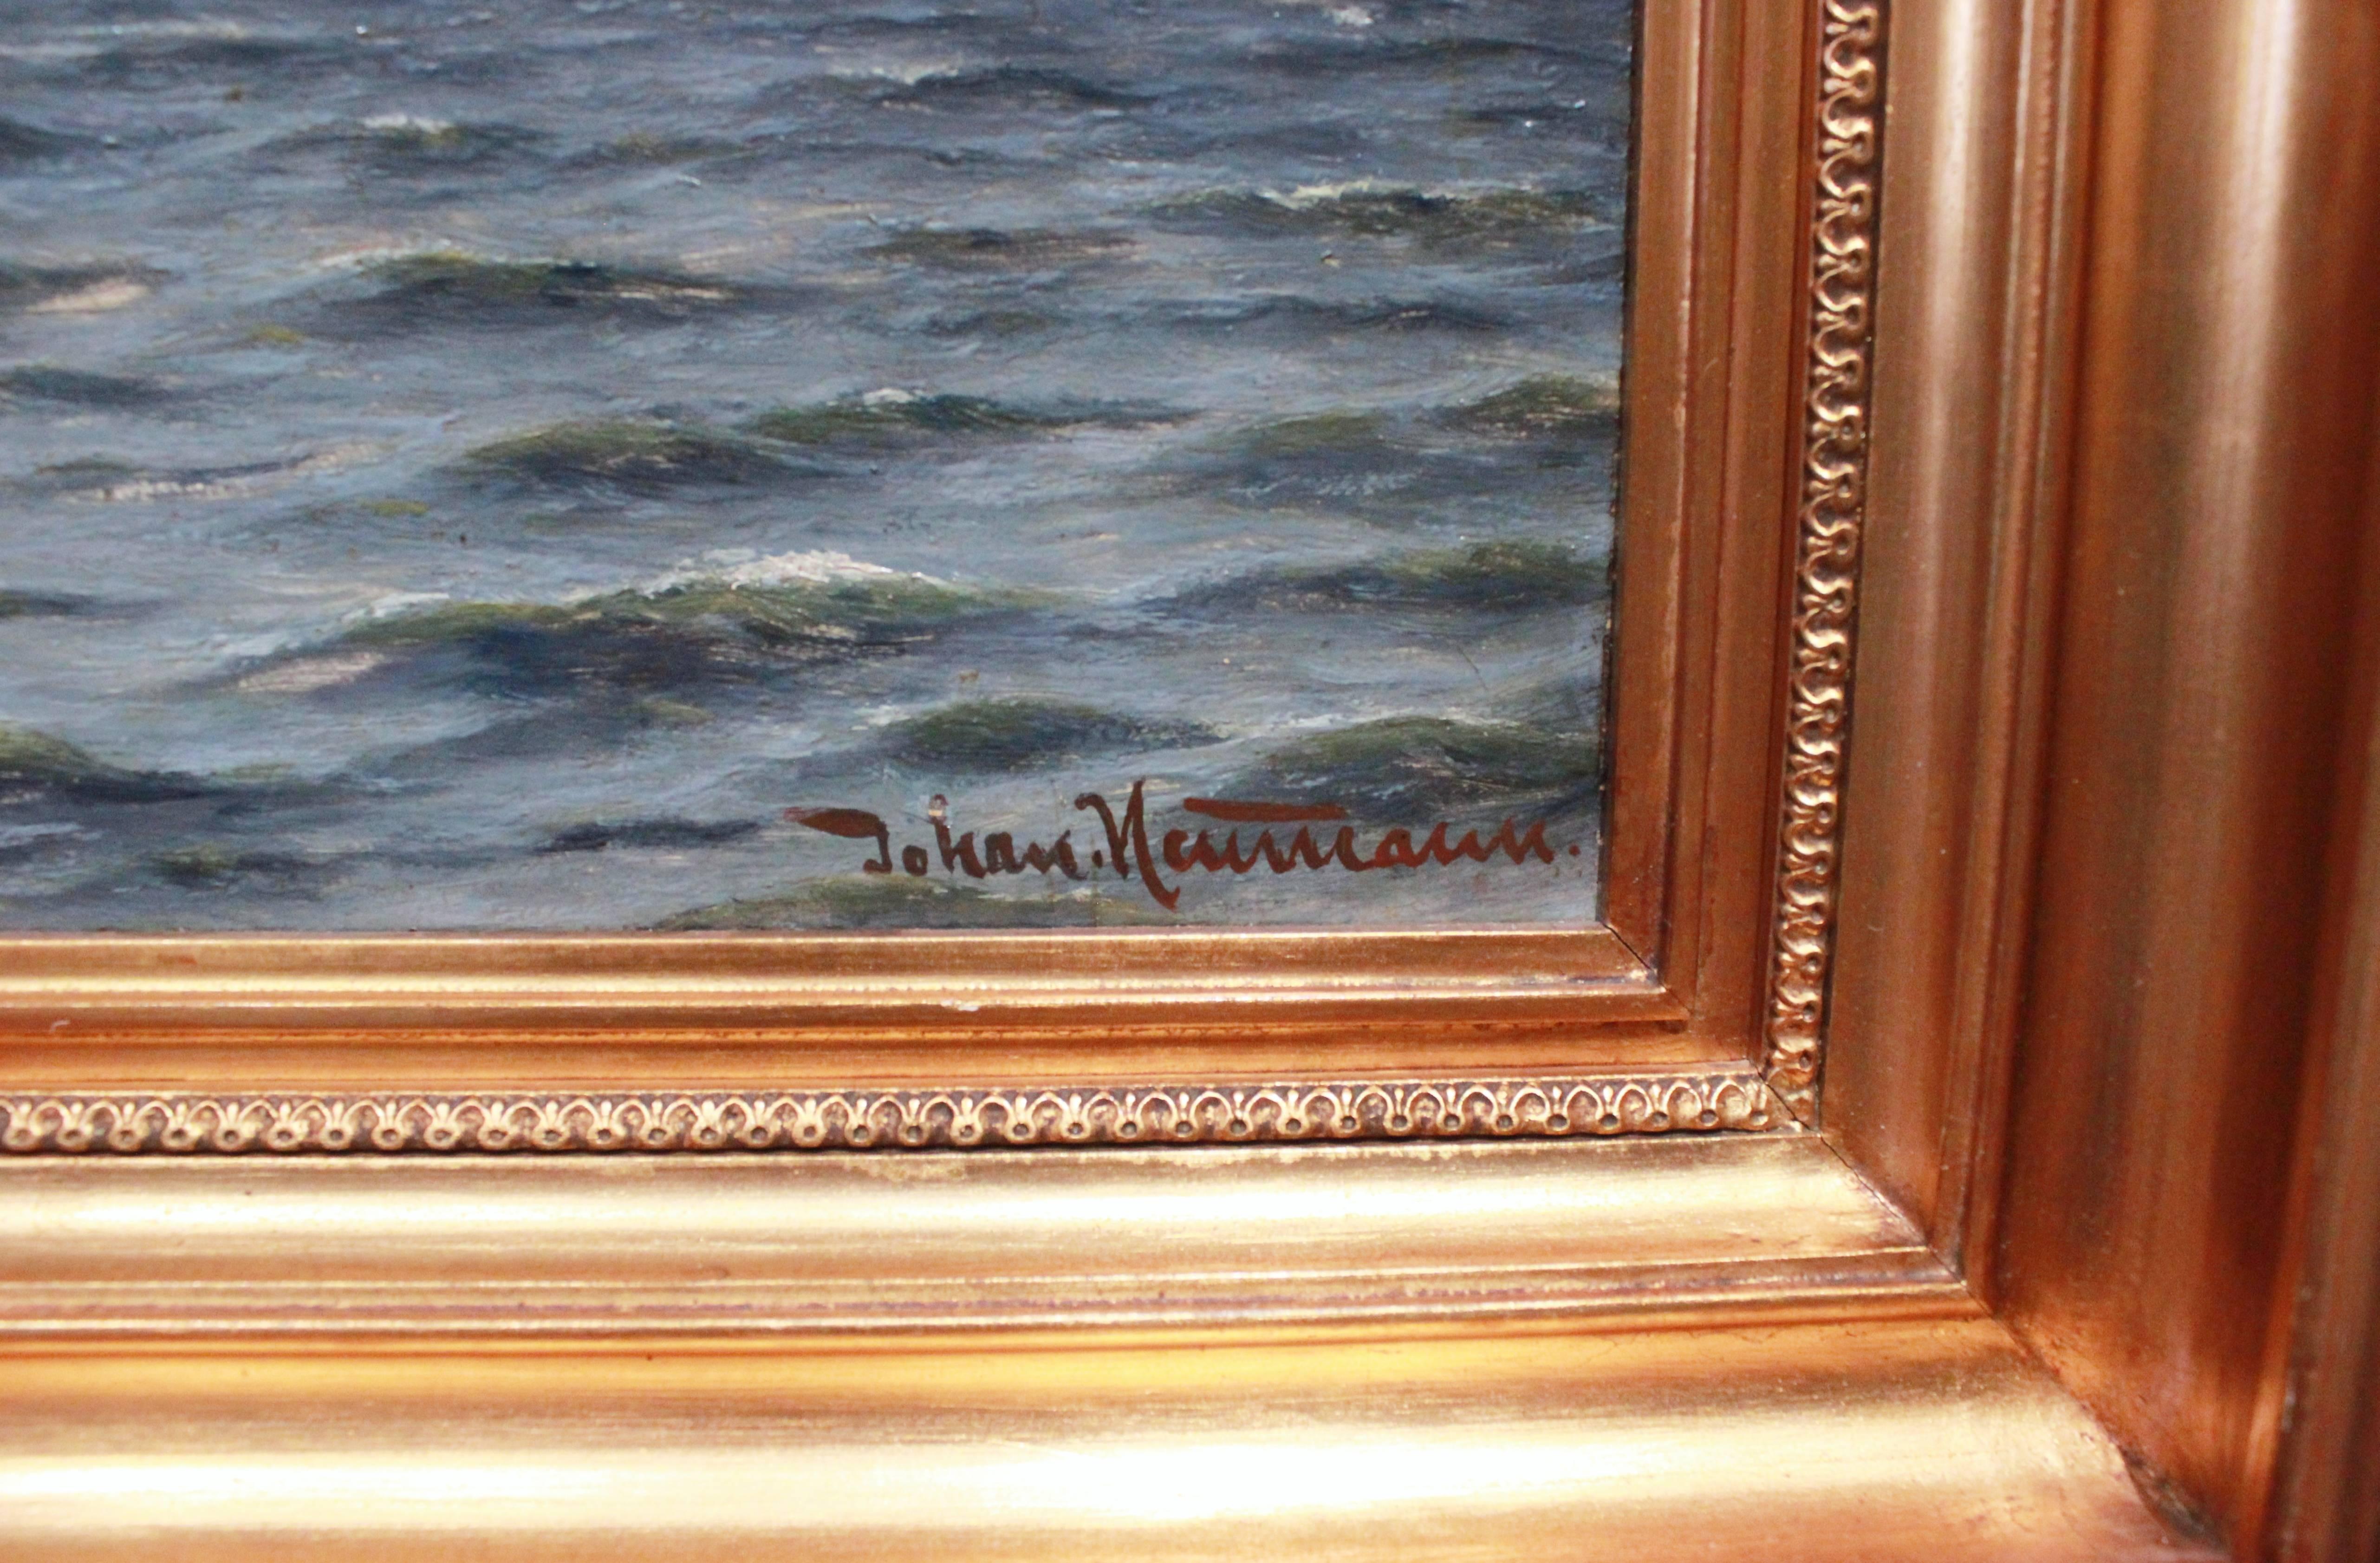 Oiled Marine Painting, Copenhagen by Johan Neumann